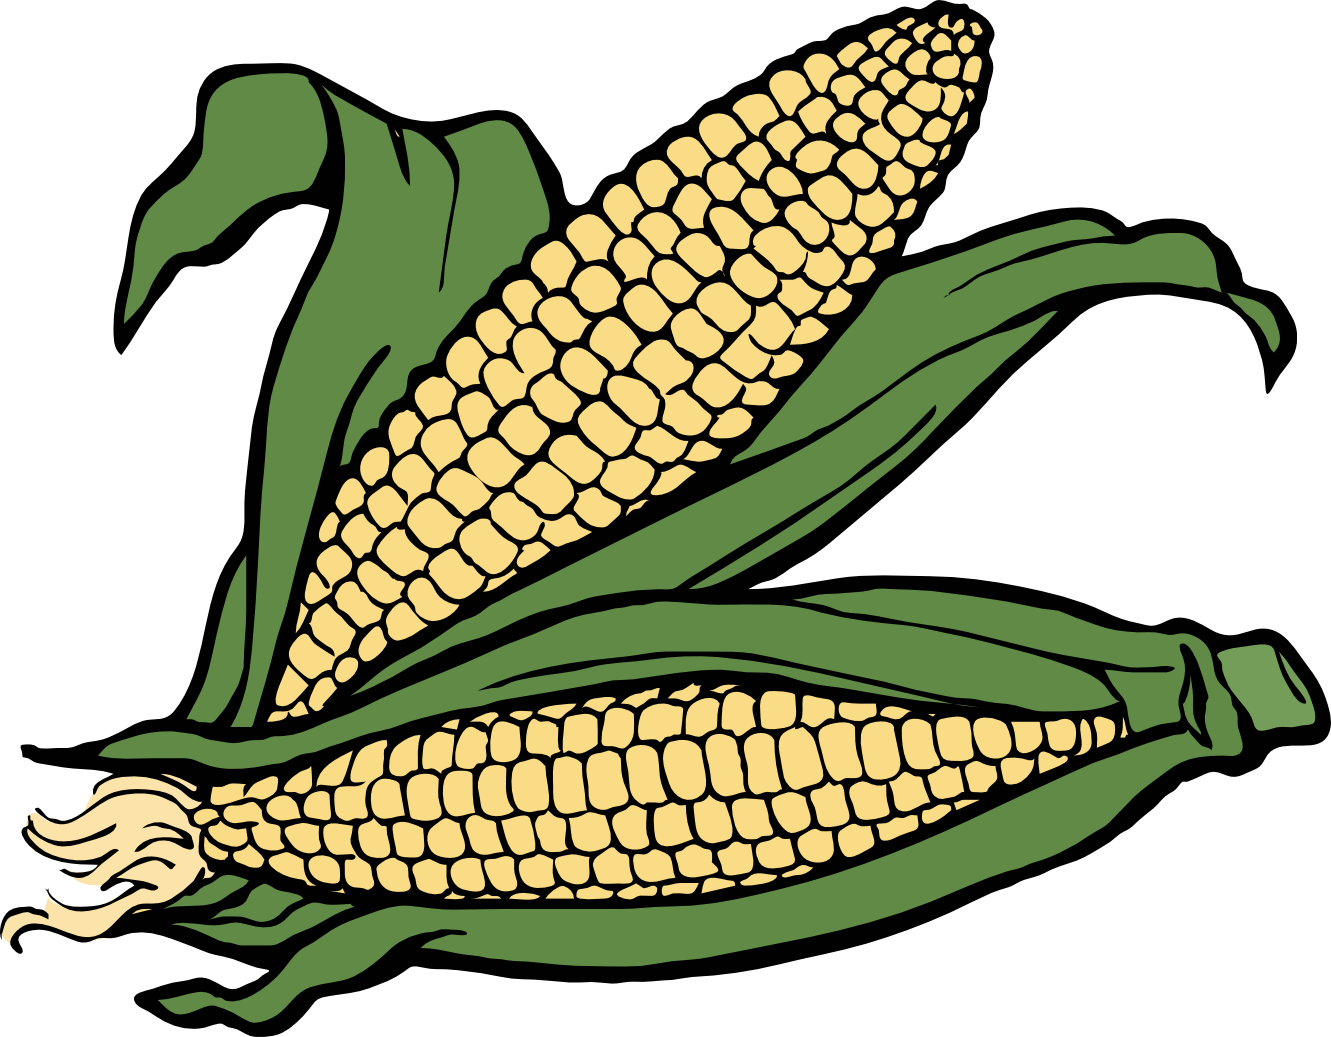 Corn kidz. Кукуруза. Кукурузный початок. Кукуруза вектор. Початок кукурузы вектор.